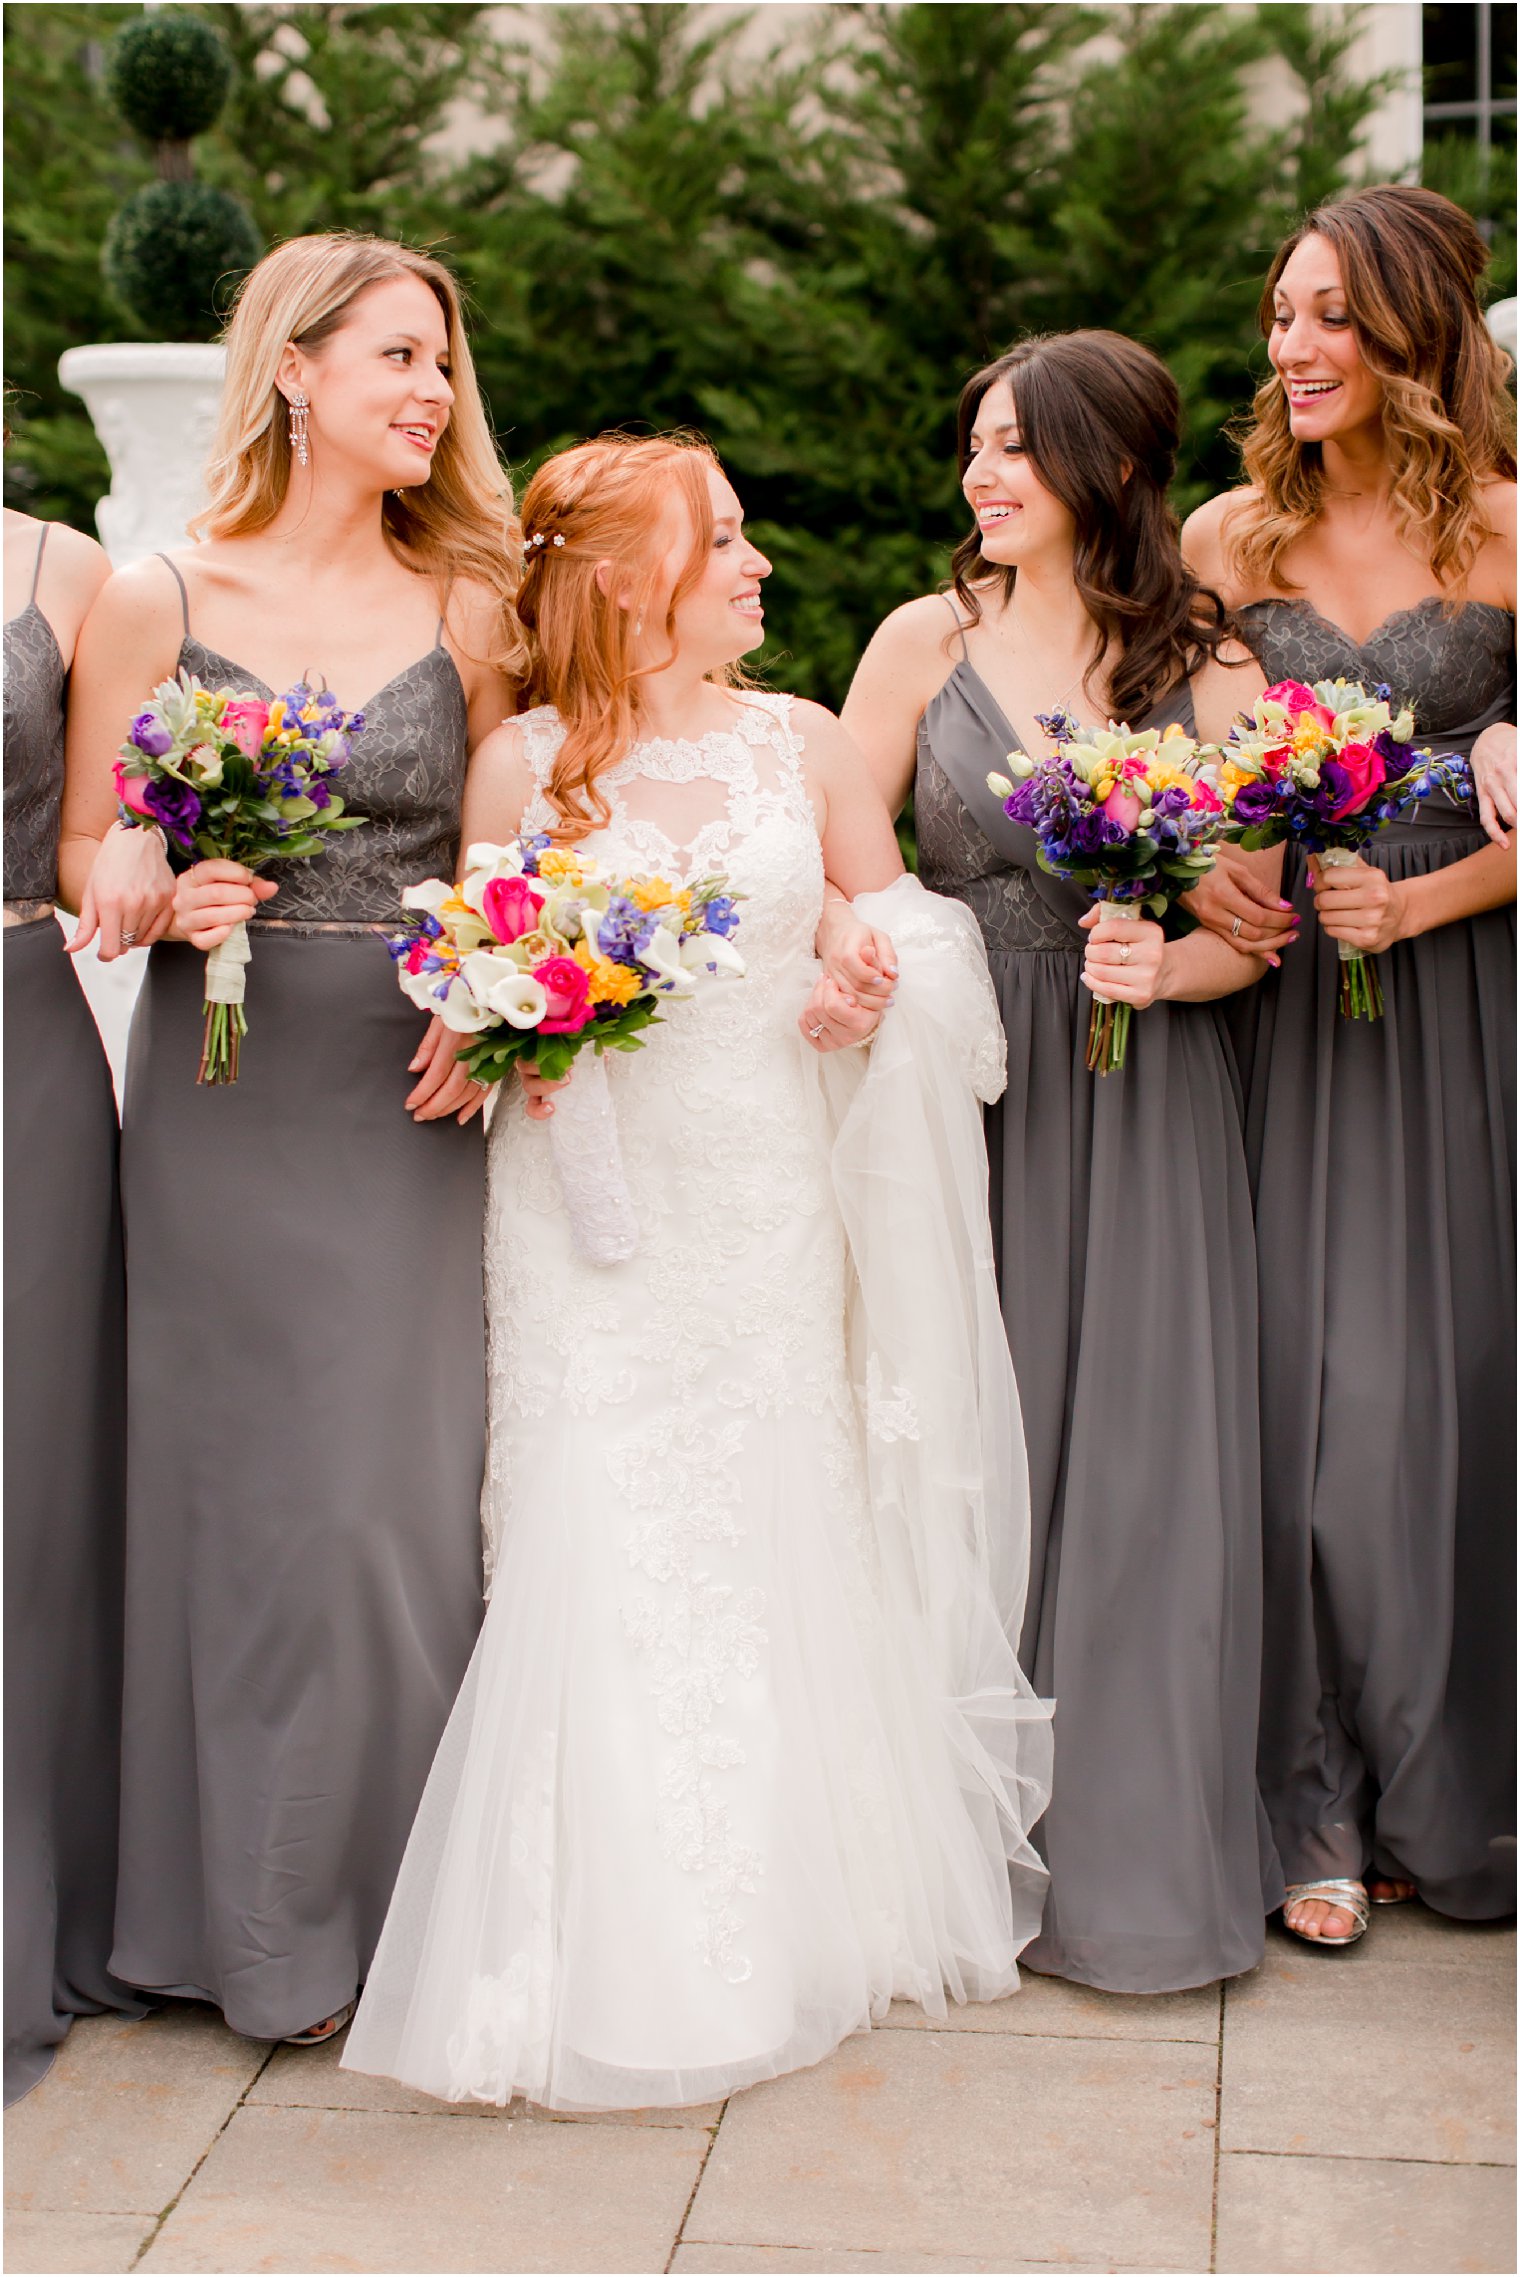 Candid Wedding Photos at Wilshire Grand | Photos by Idalia Photography